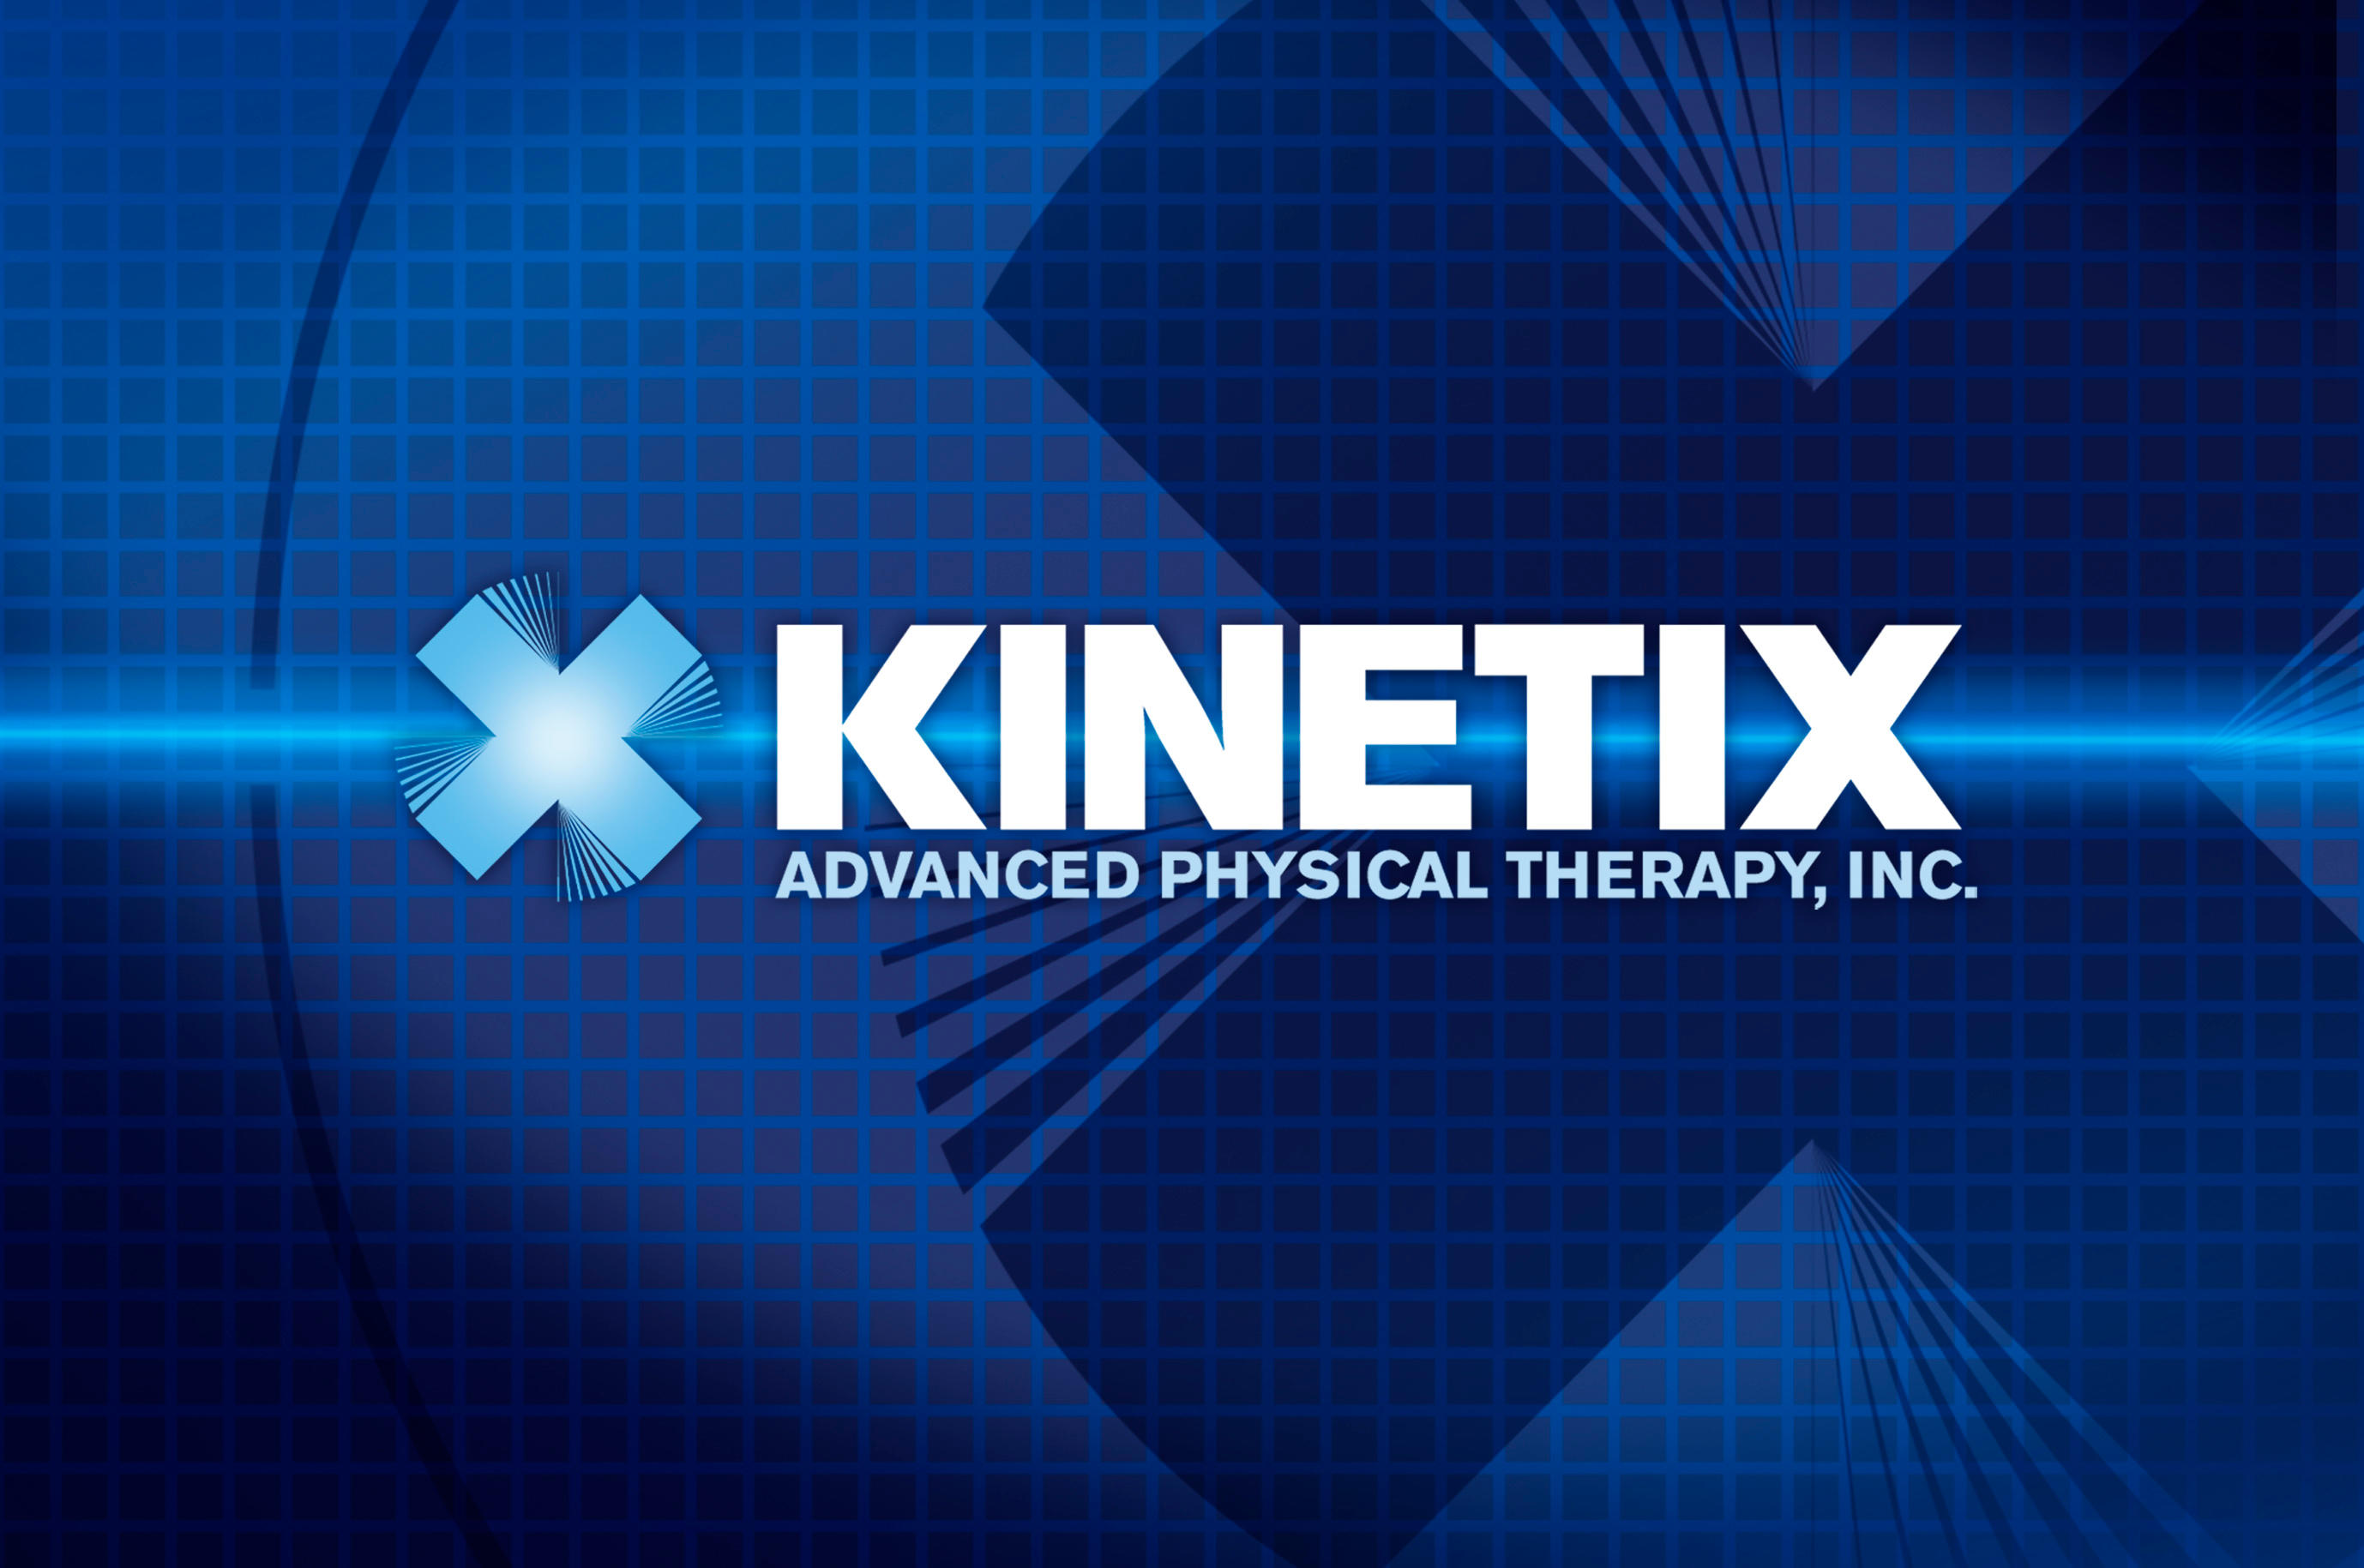 Kinetix Advanced Physical Therapy, Inc. Photo